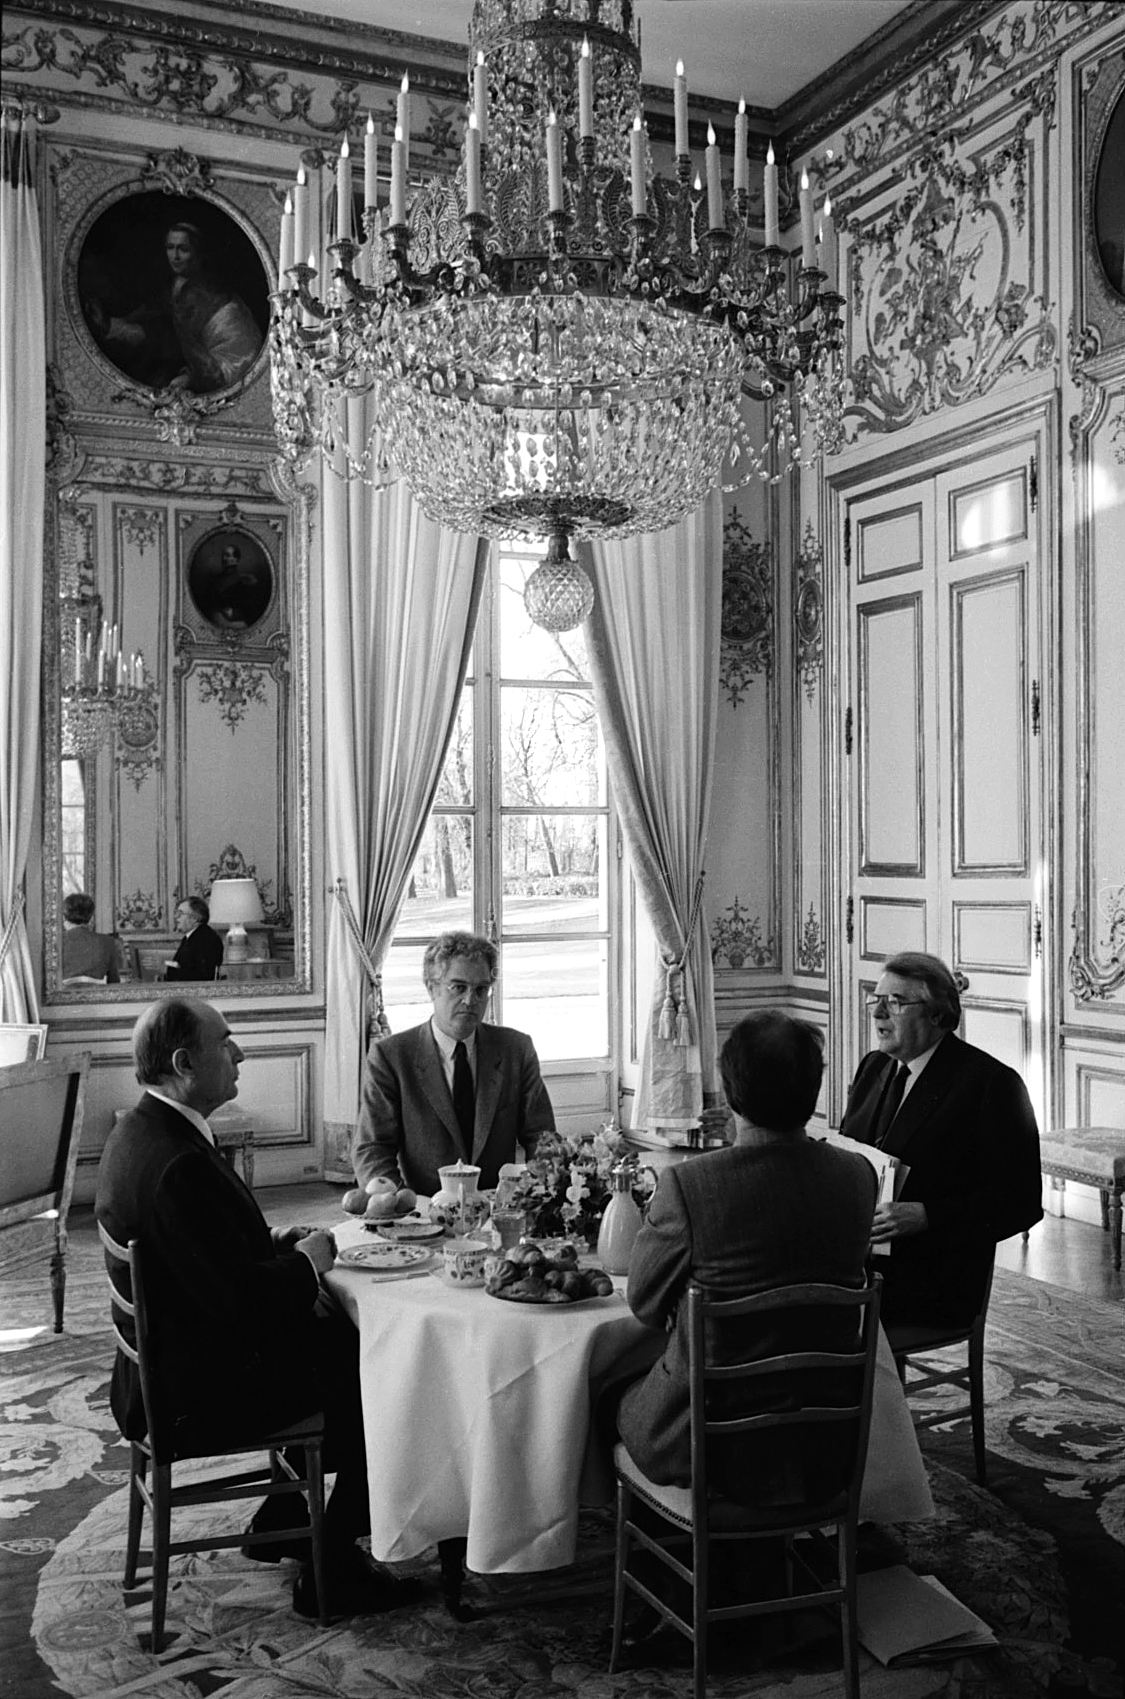  Breakfast at the Elysee Palace. 